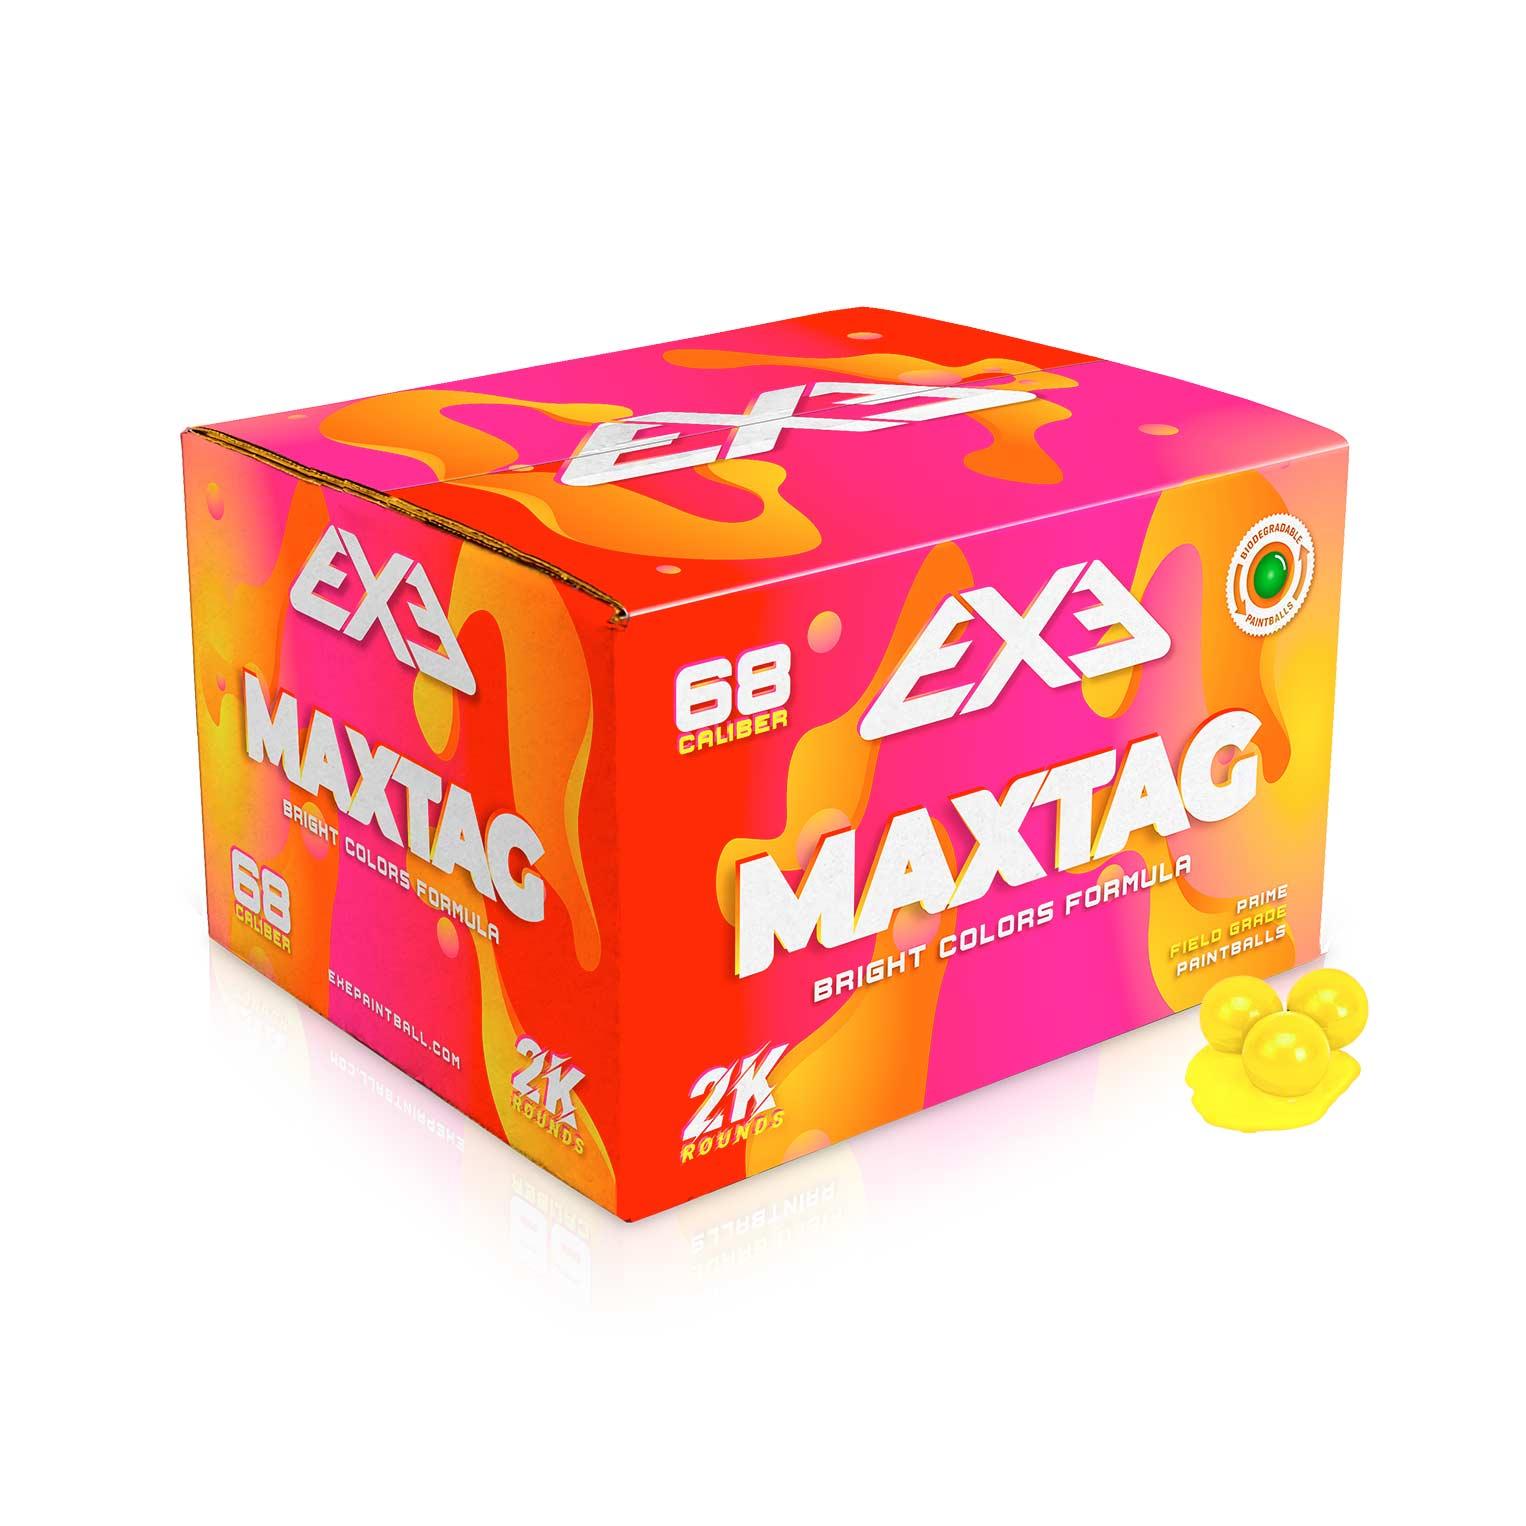 Paintballs EXE Maxtag 0.68 Yellow/Yellow